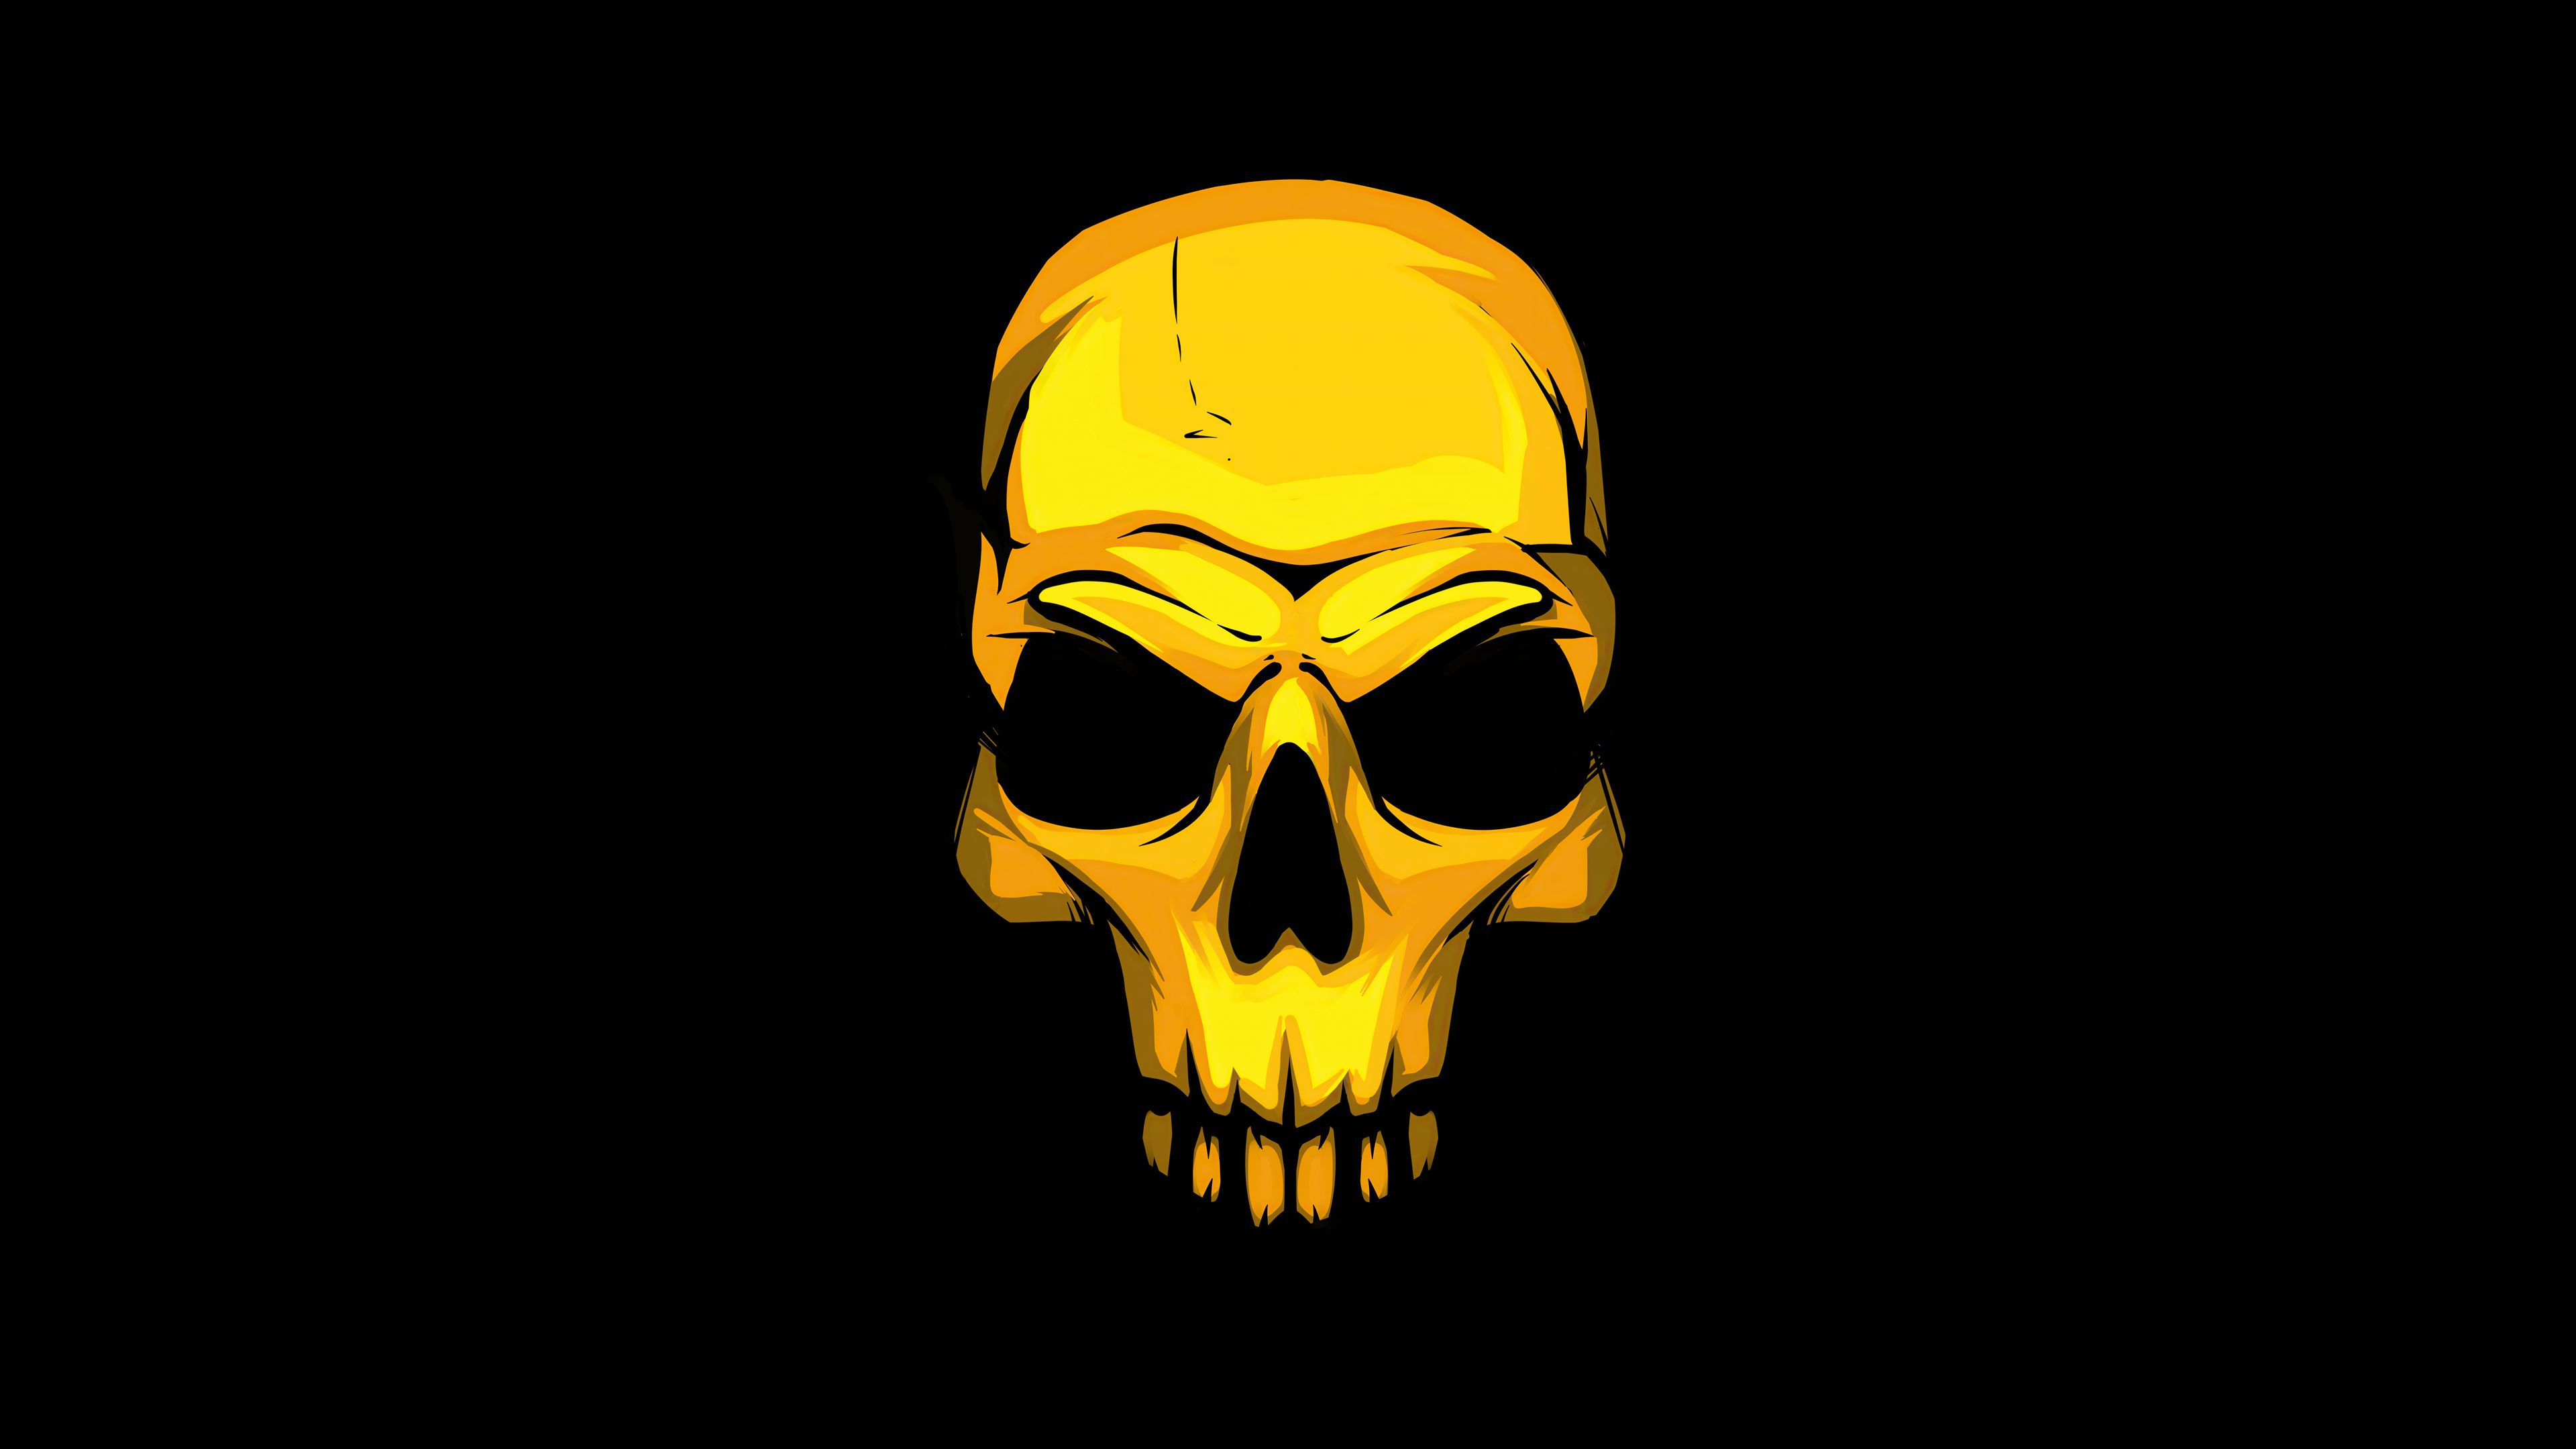 Golden Skull Wallpaper, HD Artist 4K Wallpaper, Image, Photo and Background